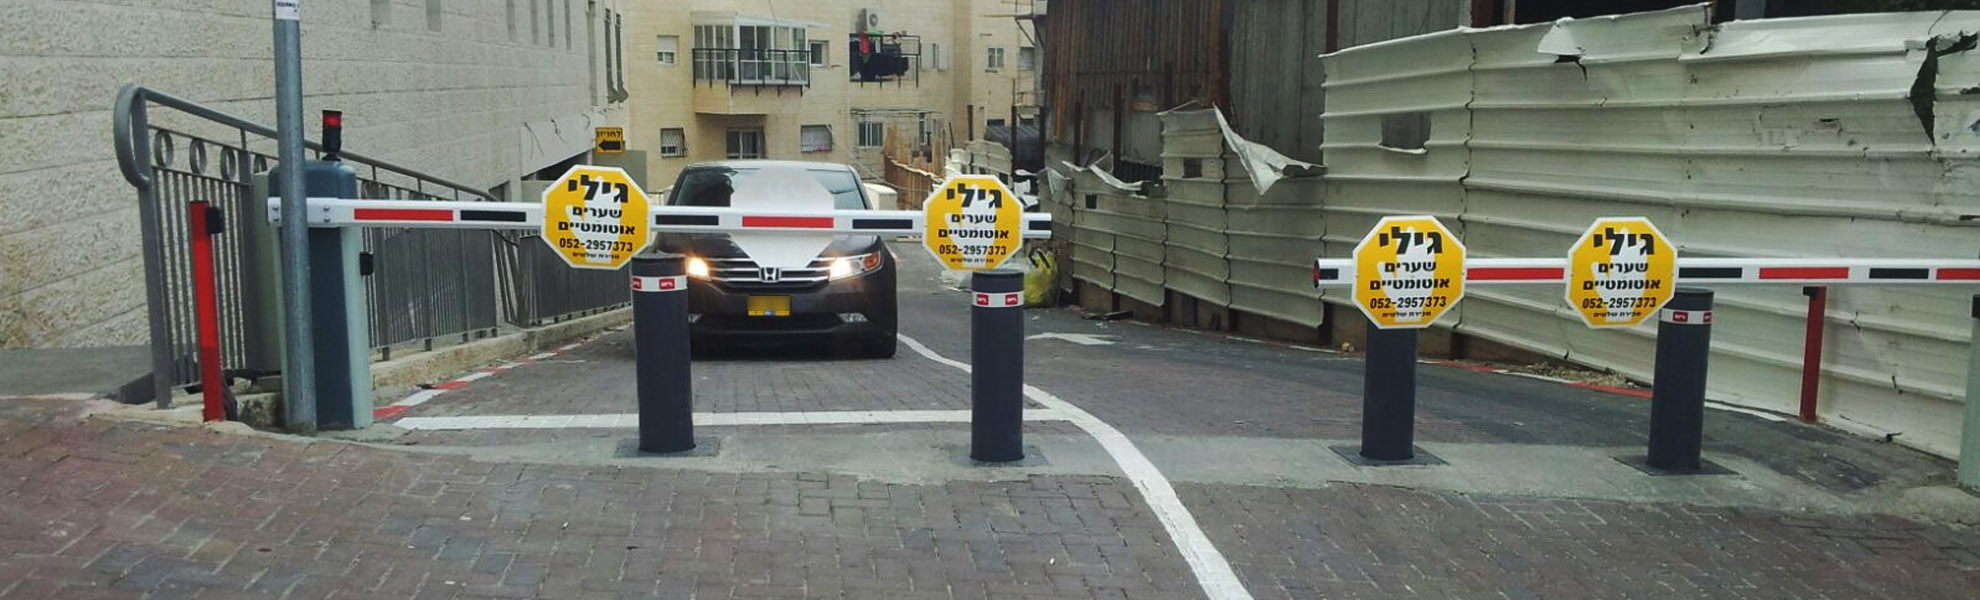 barrier in a car park